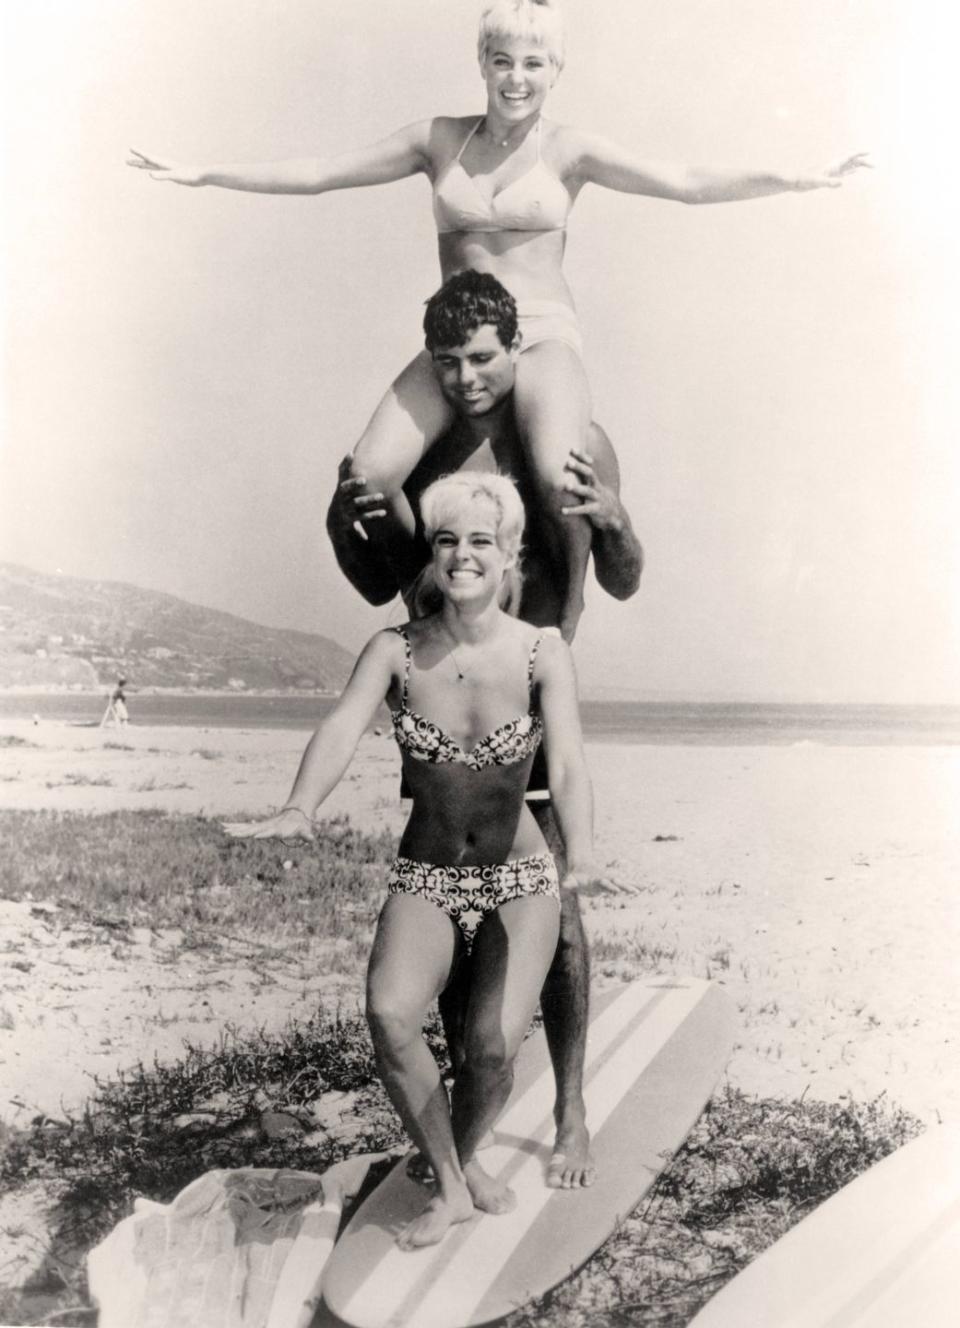 Posing on a surfboard: circa 1970